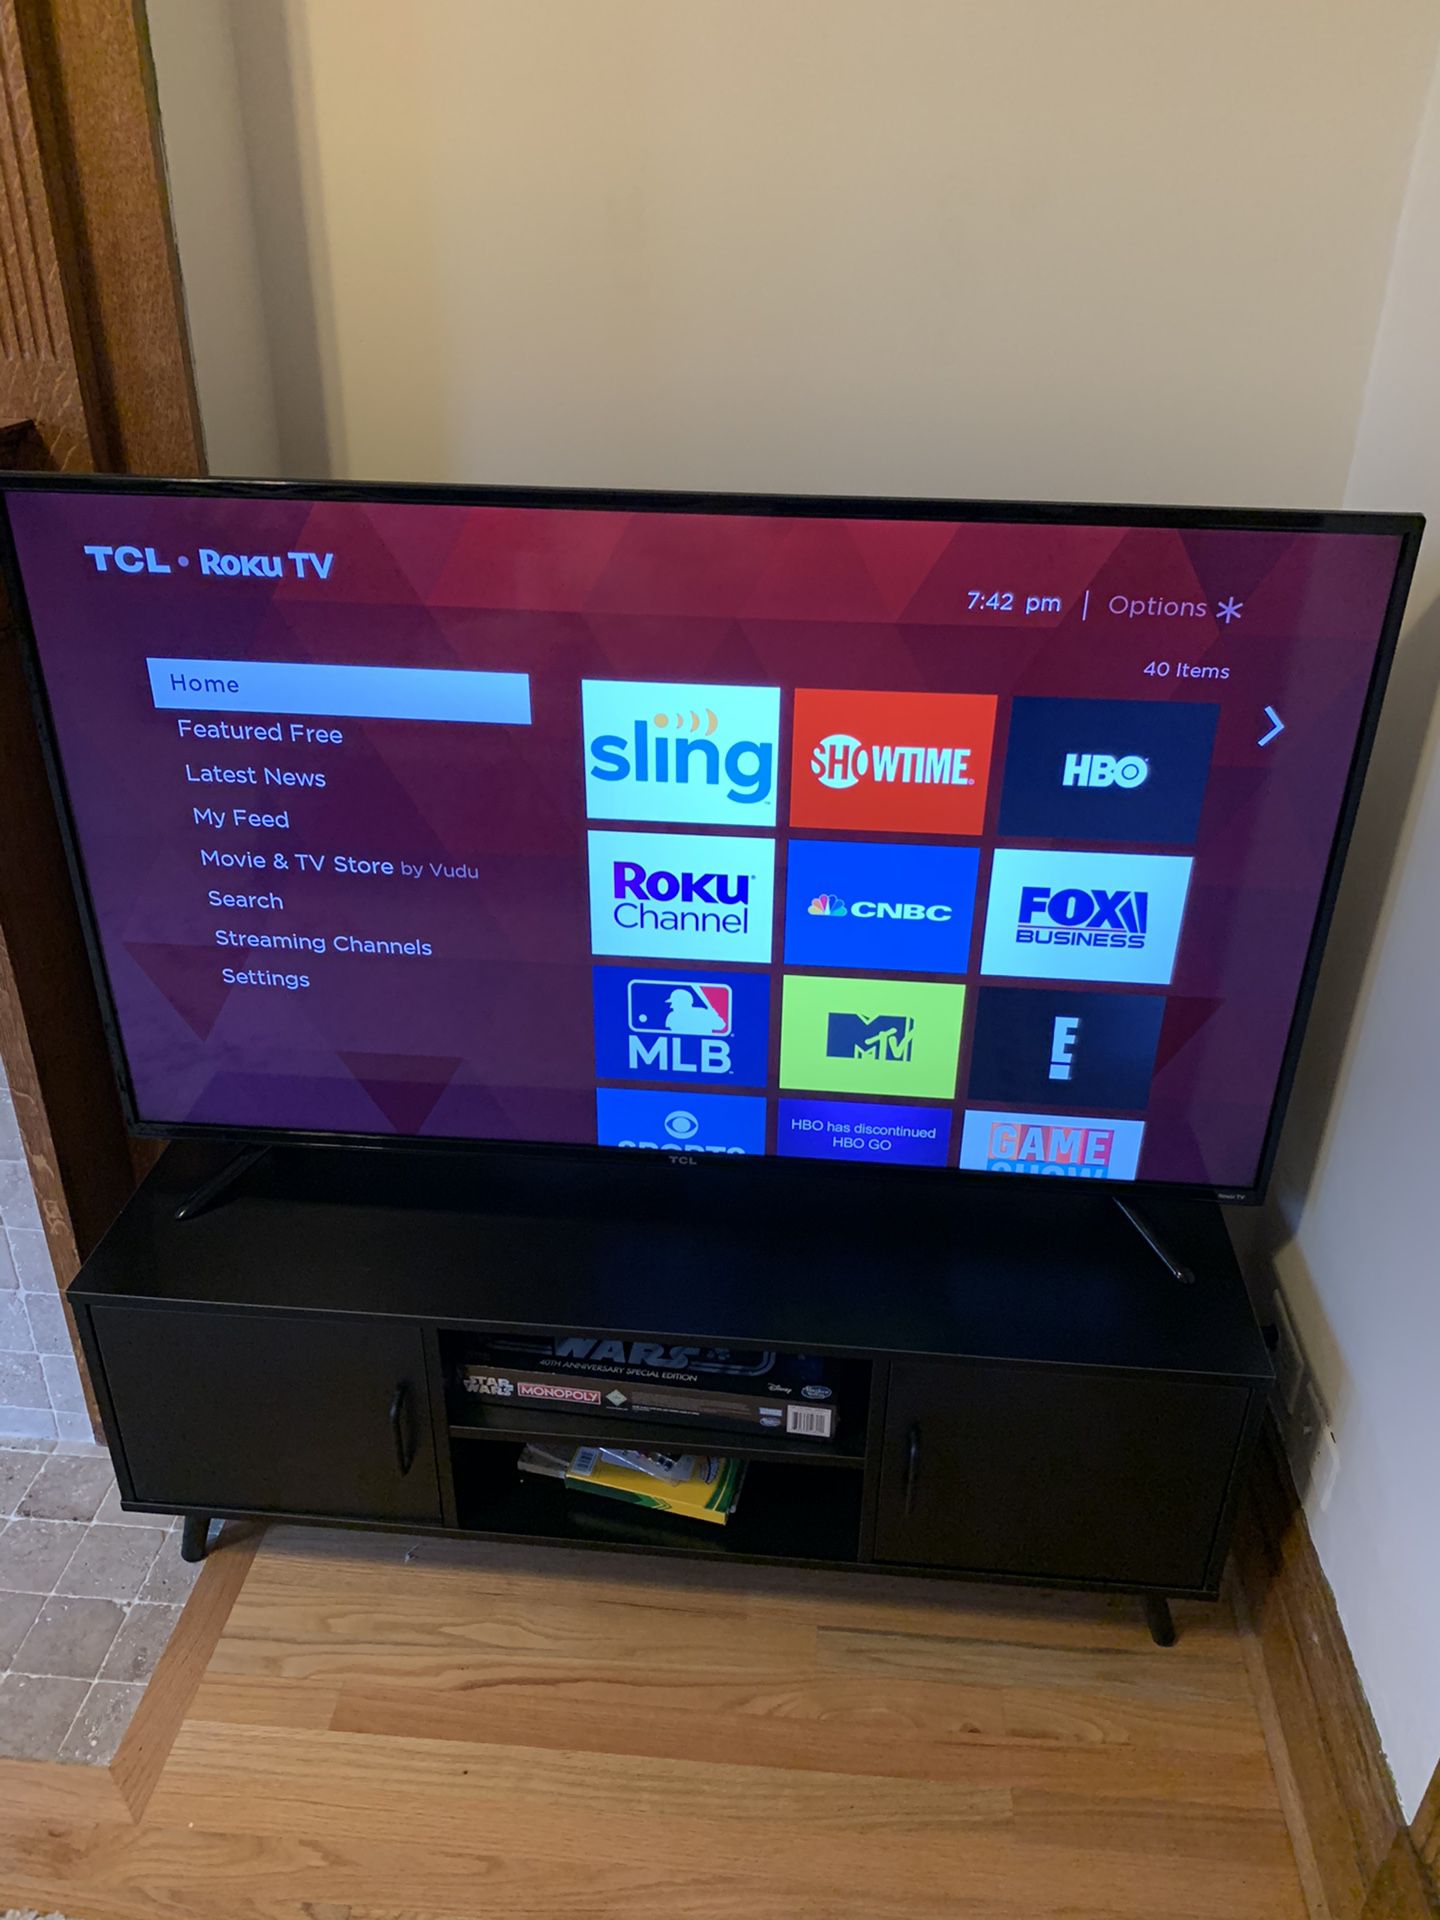 TCL 48” Roku Smart TV - 1080p High Definition